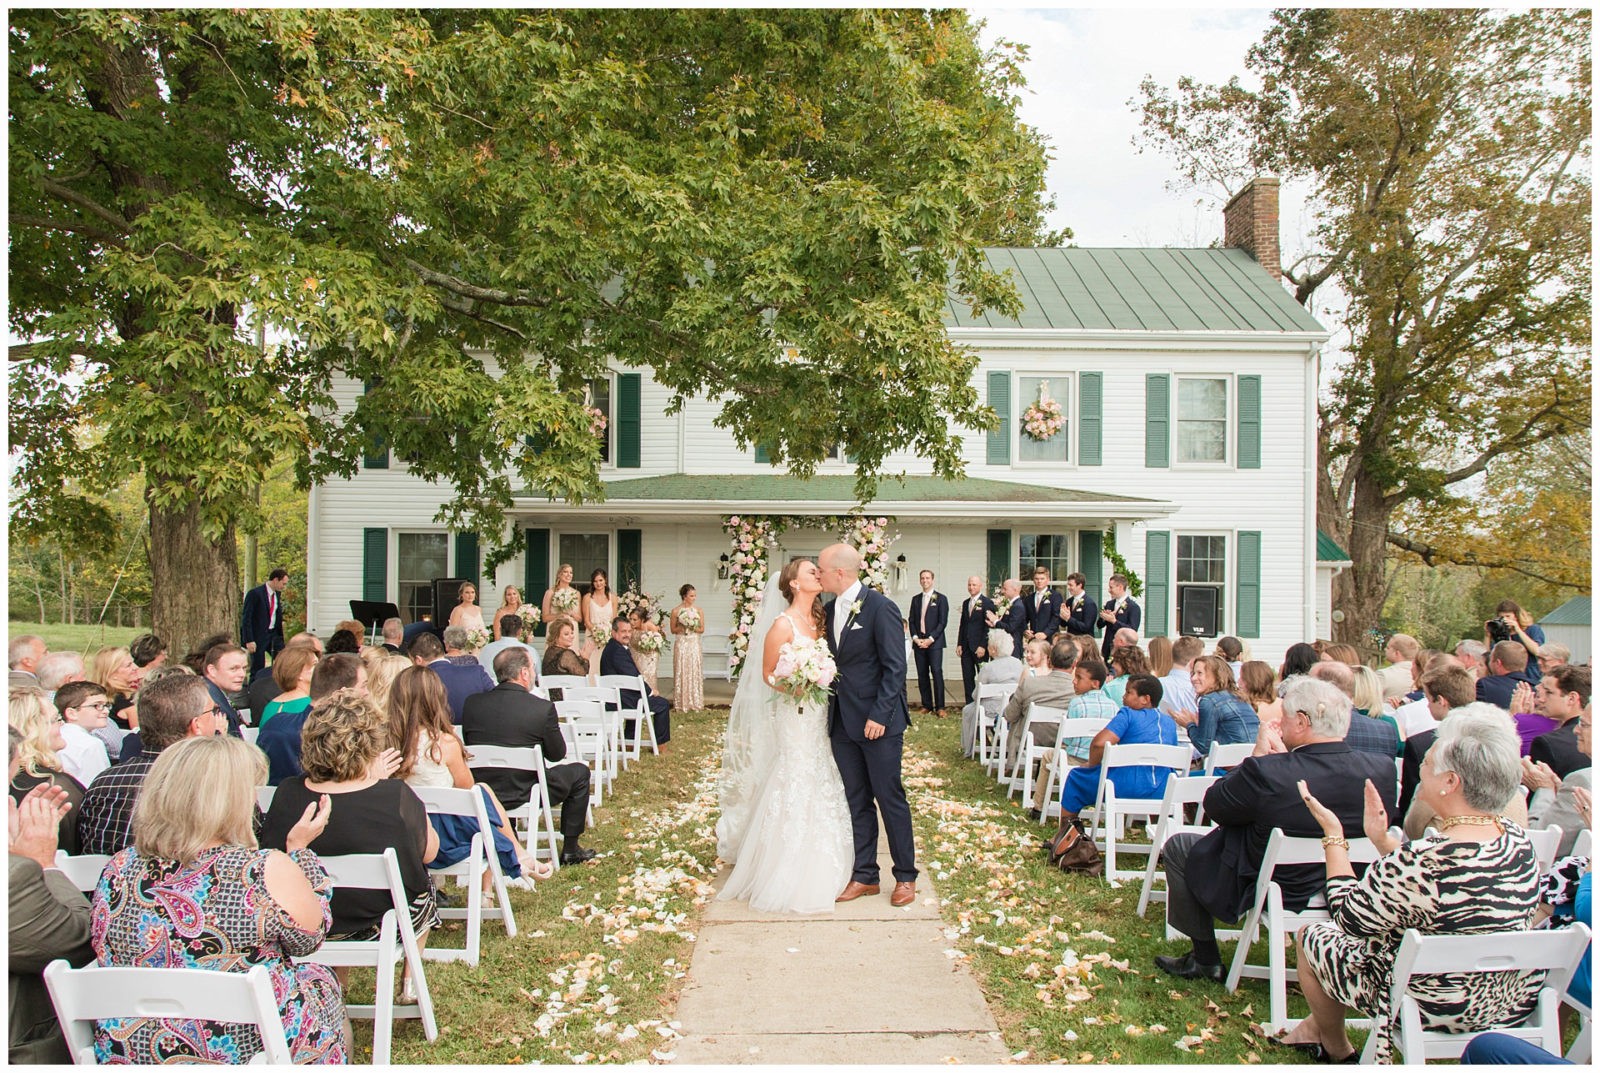 Outdoor ceremony wedding photography in Bardstown, Kentucky.